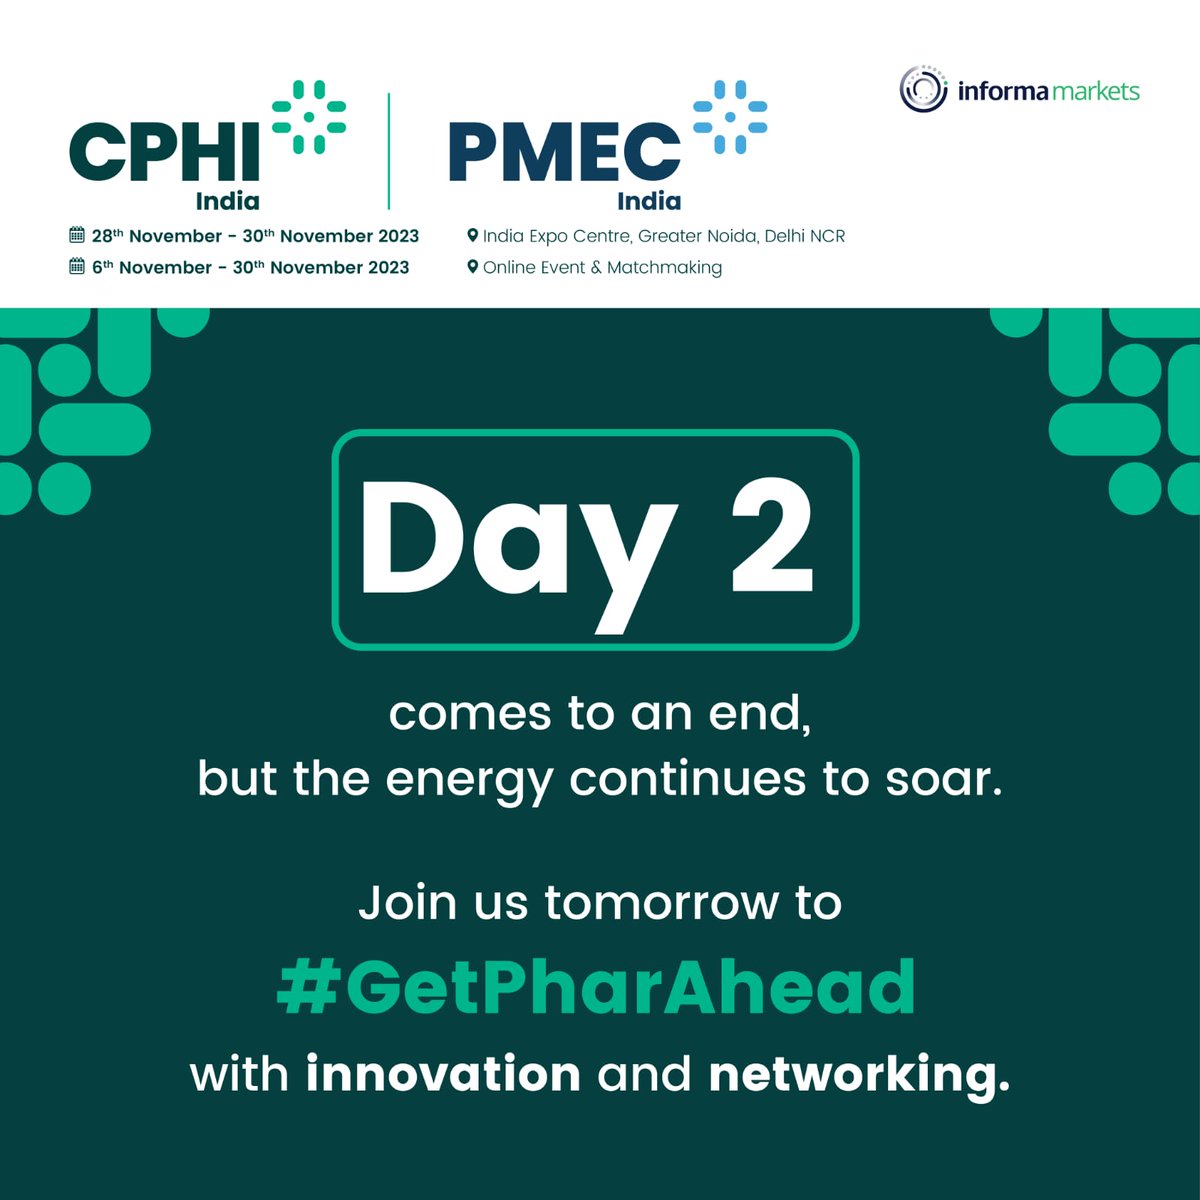 Day 2 closes with a burst of energy! Anticipate more innovation and networking tomorrow as we #GetPharAhead

#Day2 #CPHI2023 #PMEC2023 #PharmaIndustry #Innovation #Collaboration #GetPharAhead #CPHI #PMEC #PharmaCommunity #PharmaInnovation #DelhiNCR #Pharmavisitors #PharmaEvent